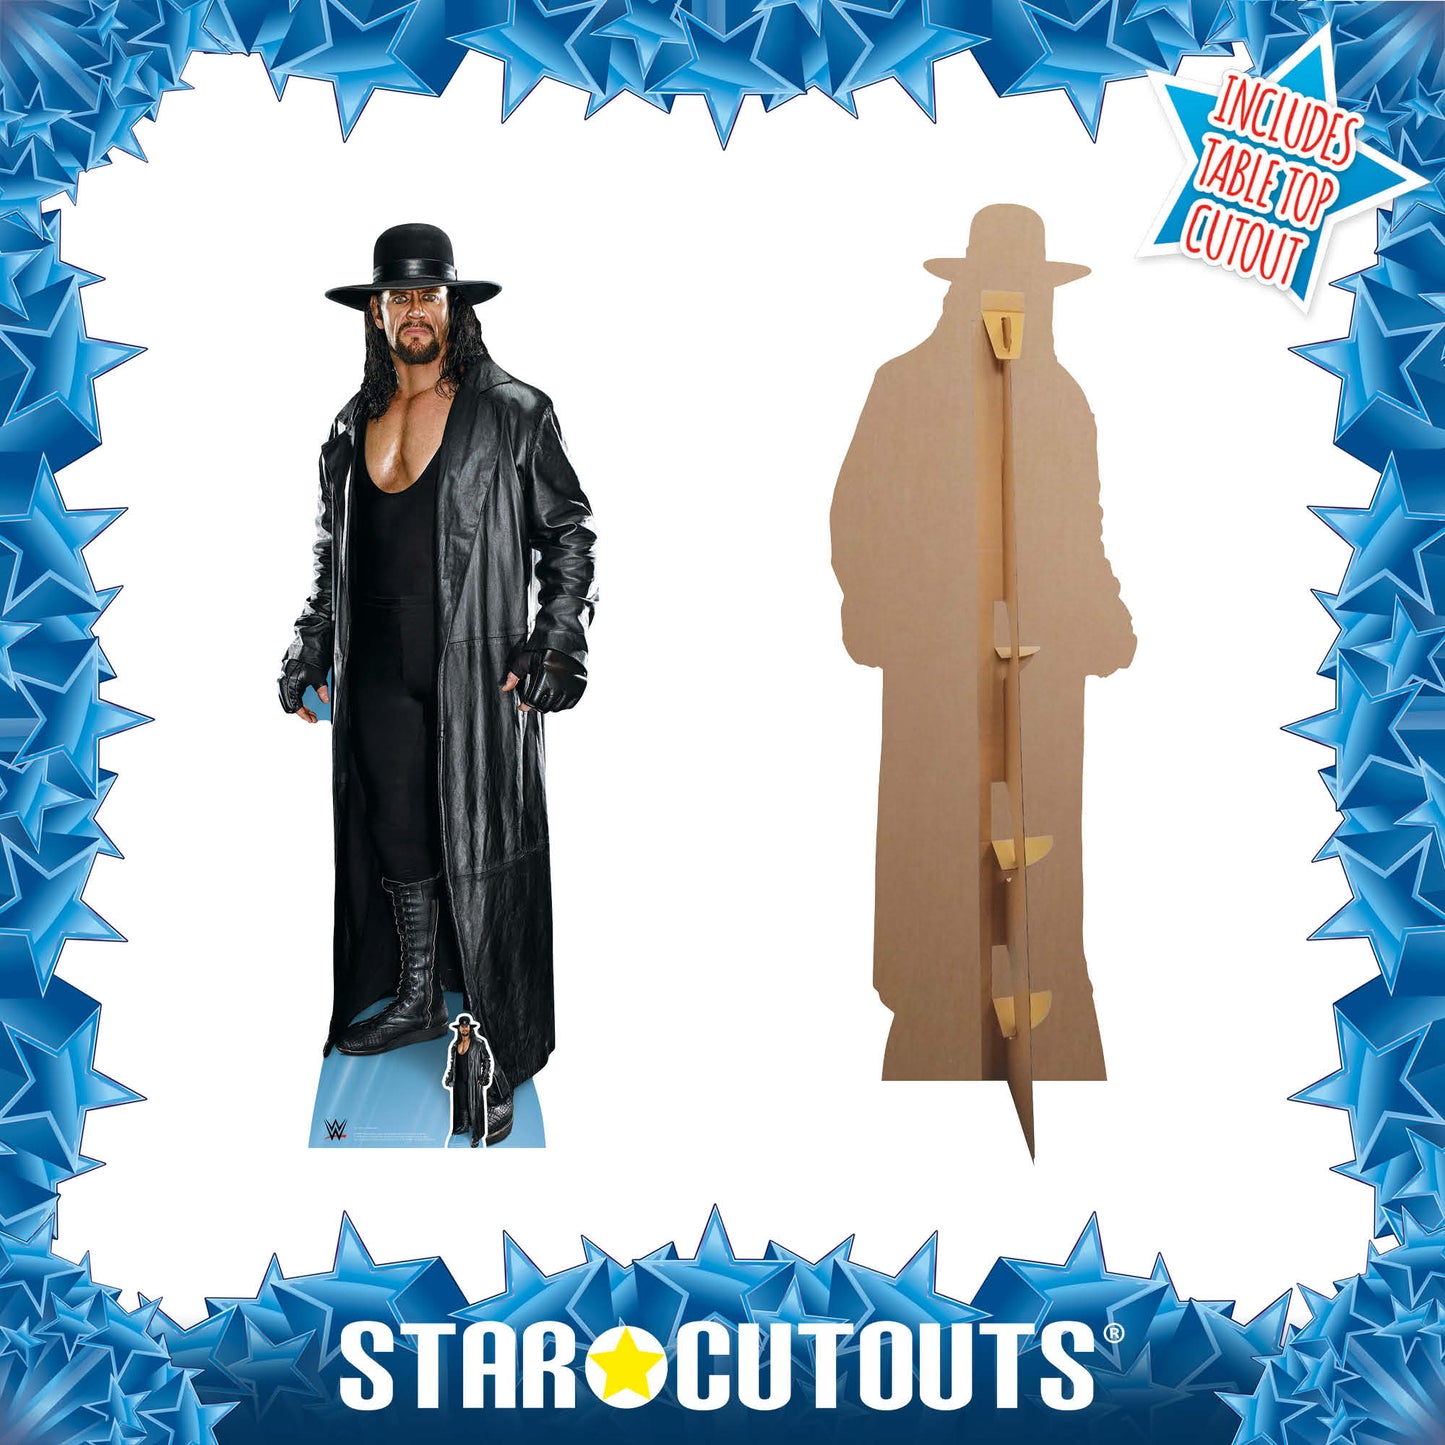 Undertaker Legend Trademark Hat and Coat Cardboard Cutout Lifesize